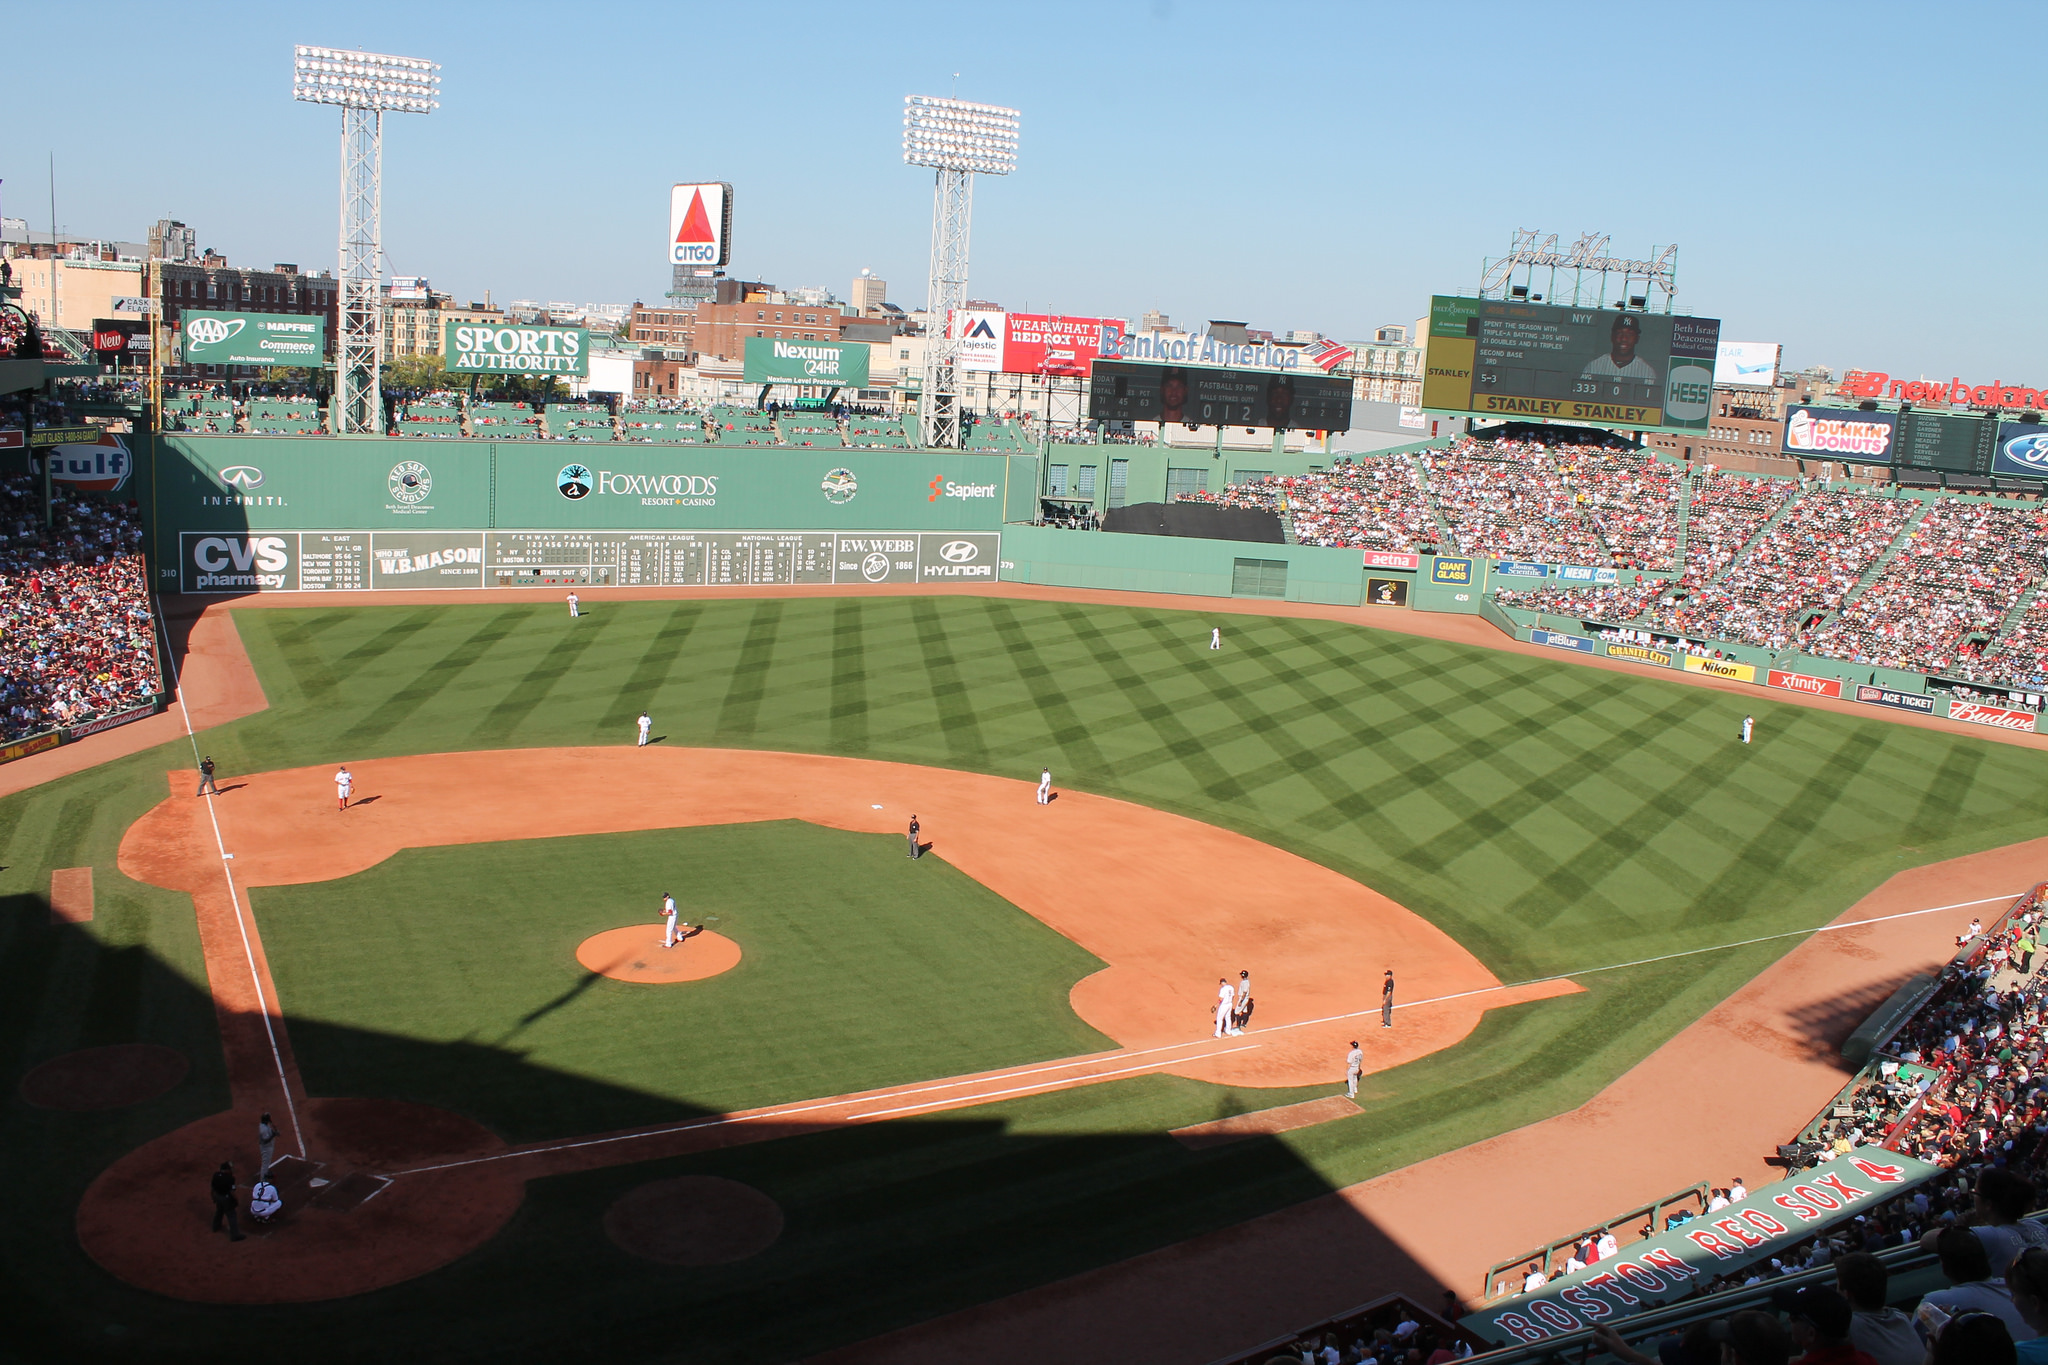 Red Sox at Fenway Park - Boston, Boston Red Sox Address: Fe…